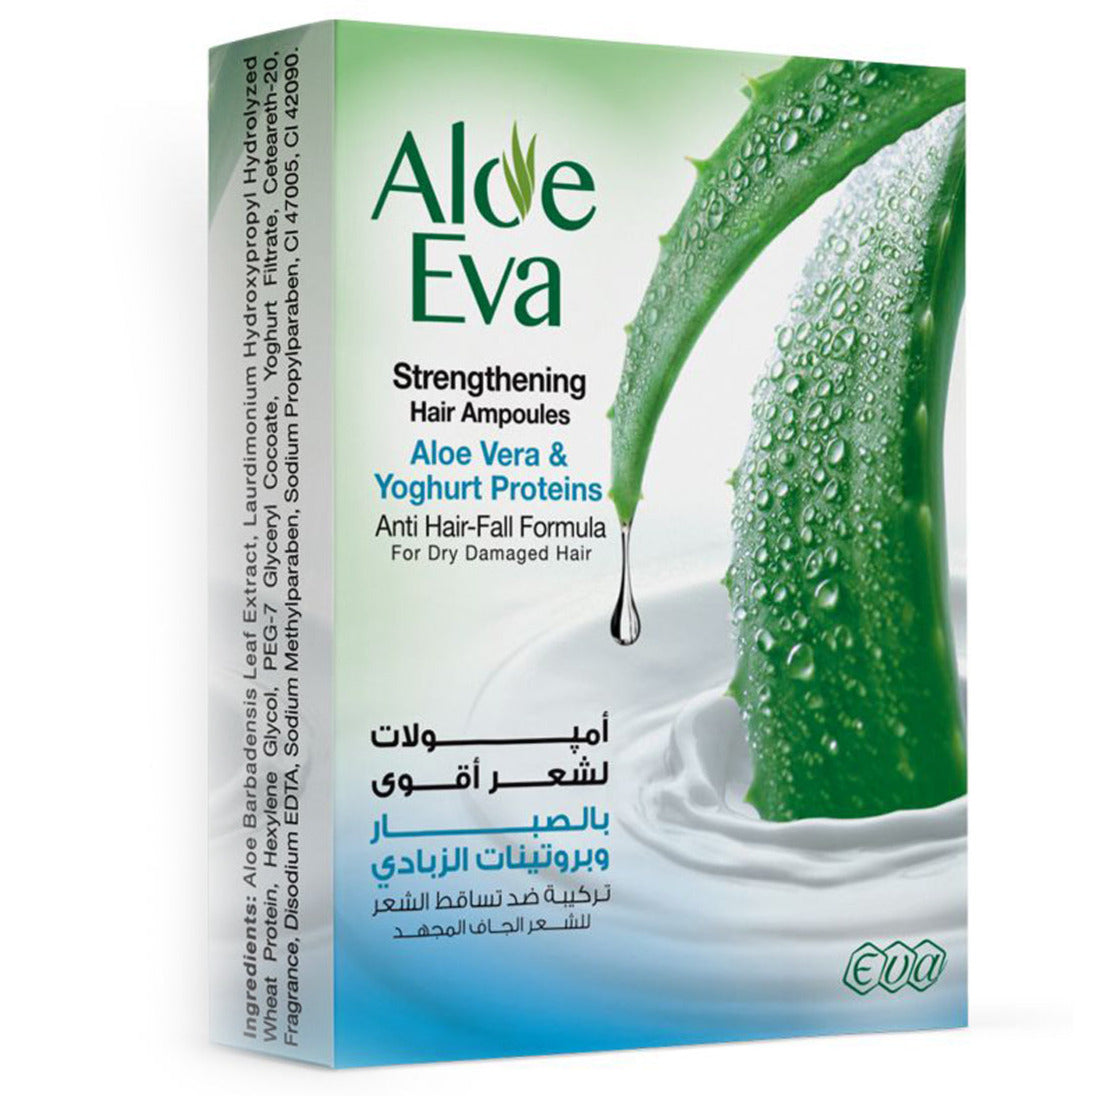 Hair Ampoules Aloe Eva with Aloe Vera and Yogurt Proteins